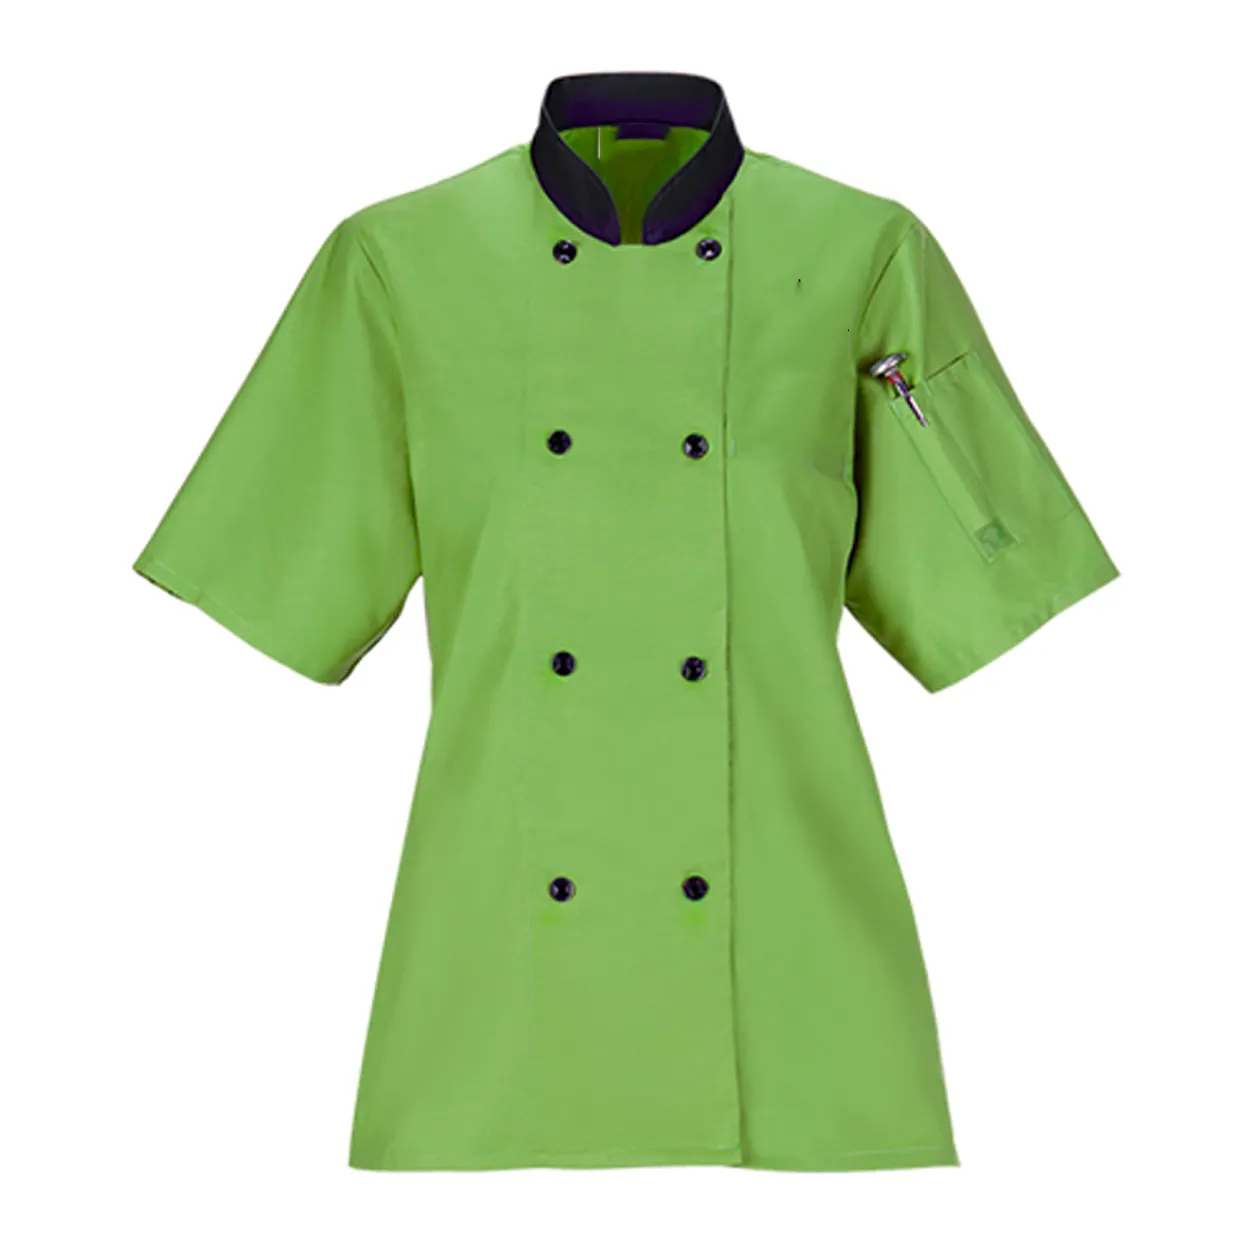 Custom design waitress uniforms cotton twill fabric or hotels bars restaurants clothing factory price uniforms